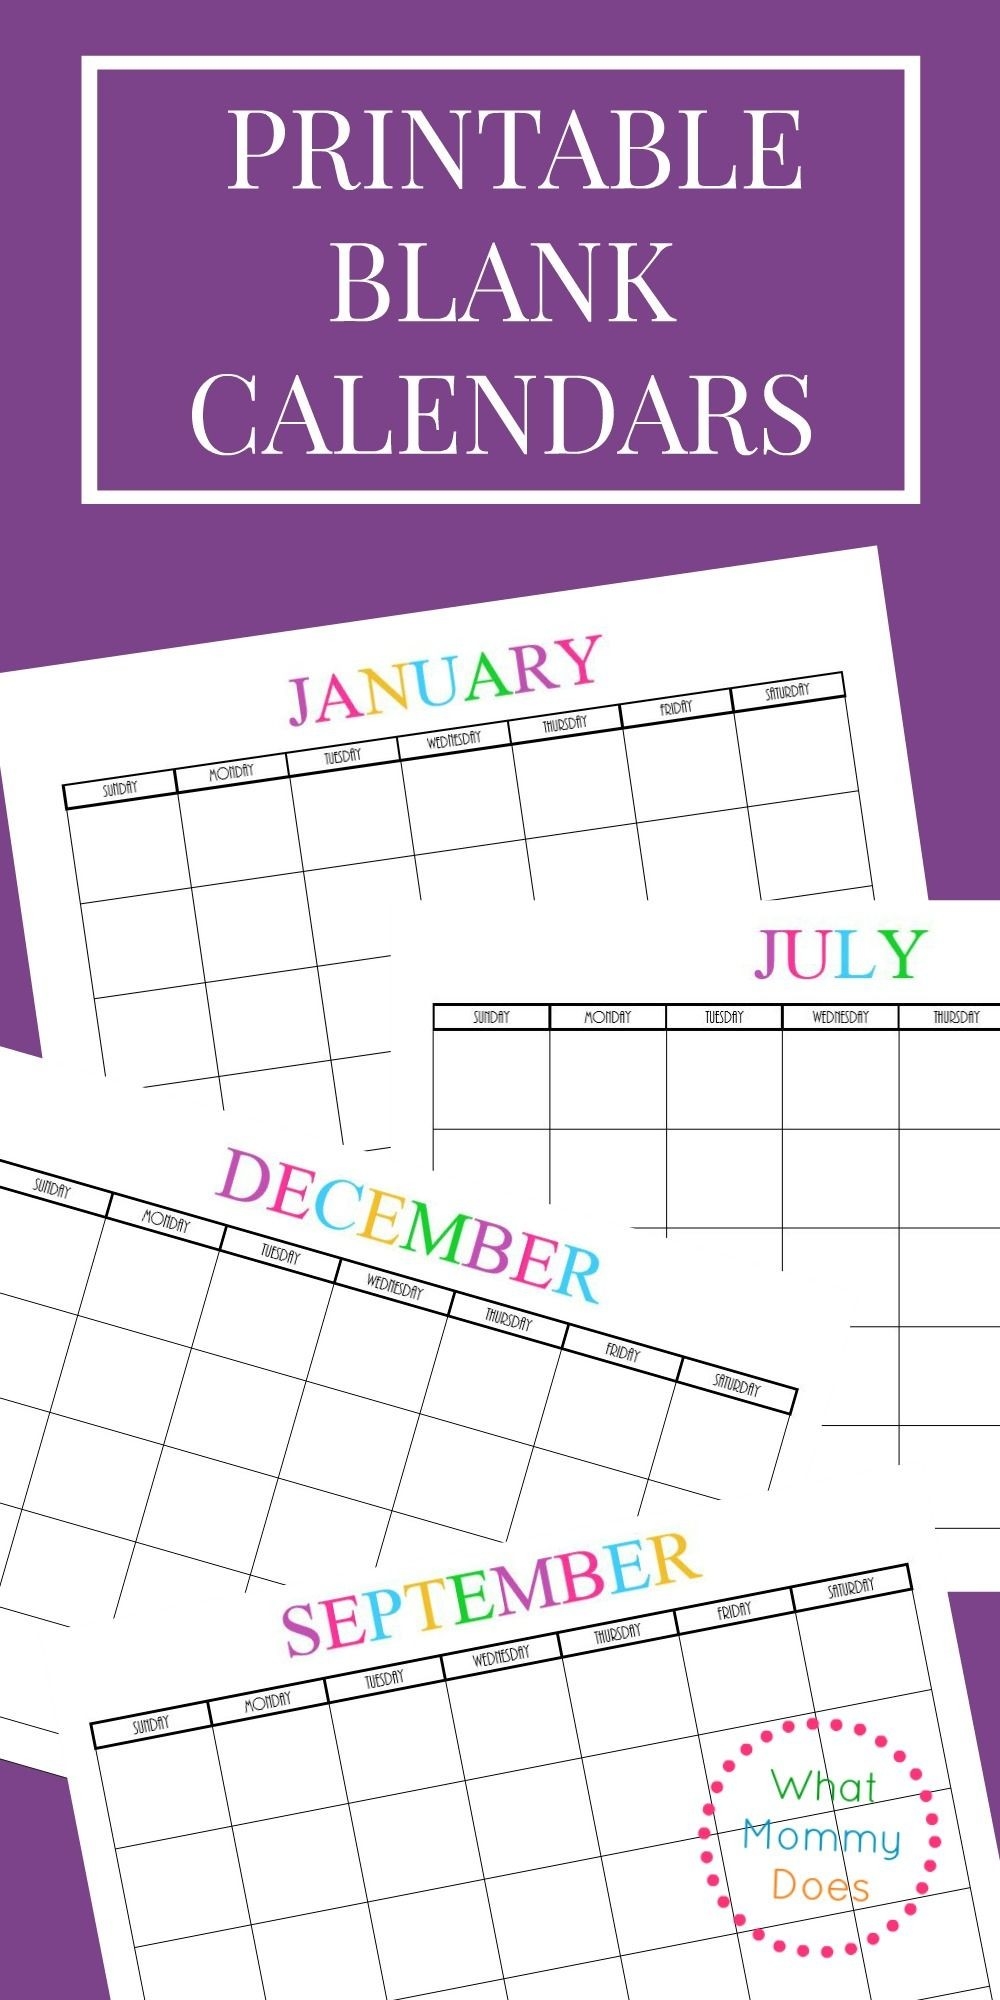 Free Printable Blank Monthly Calendars – 2018, 2019, 2020-Free Printable Budget Calendar Template 2020